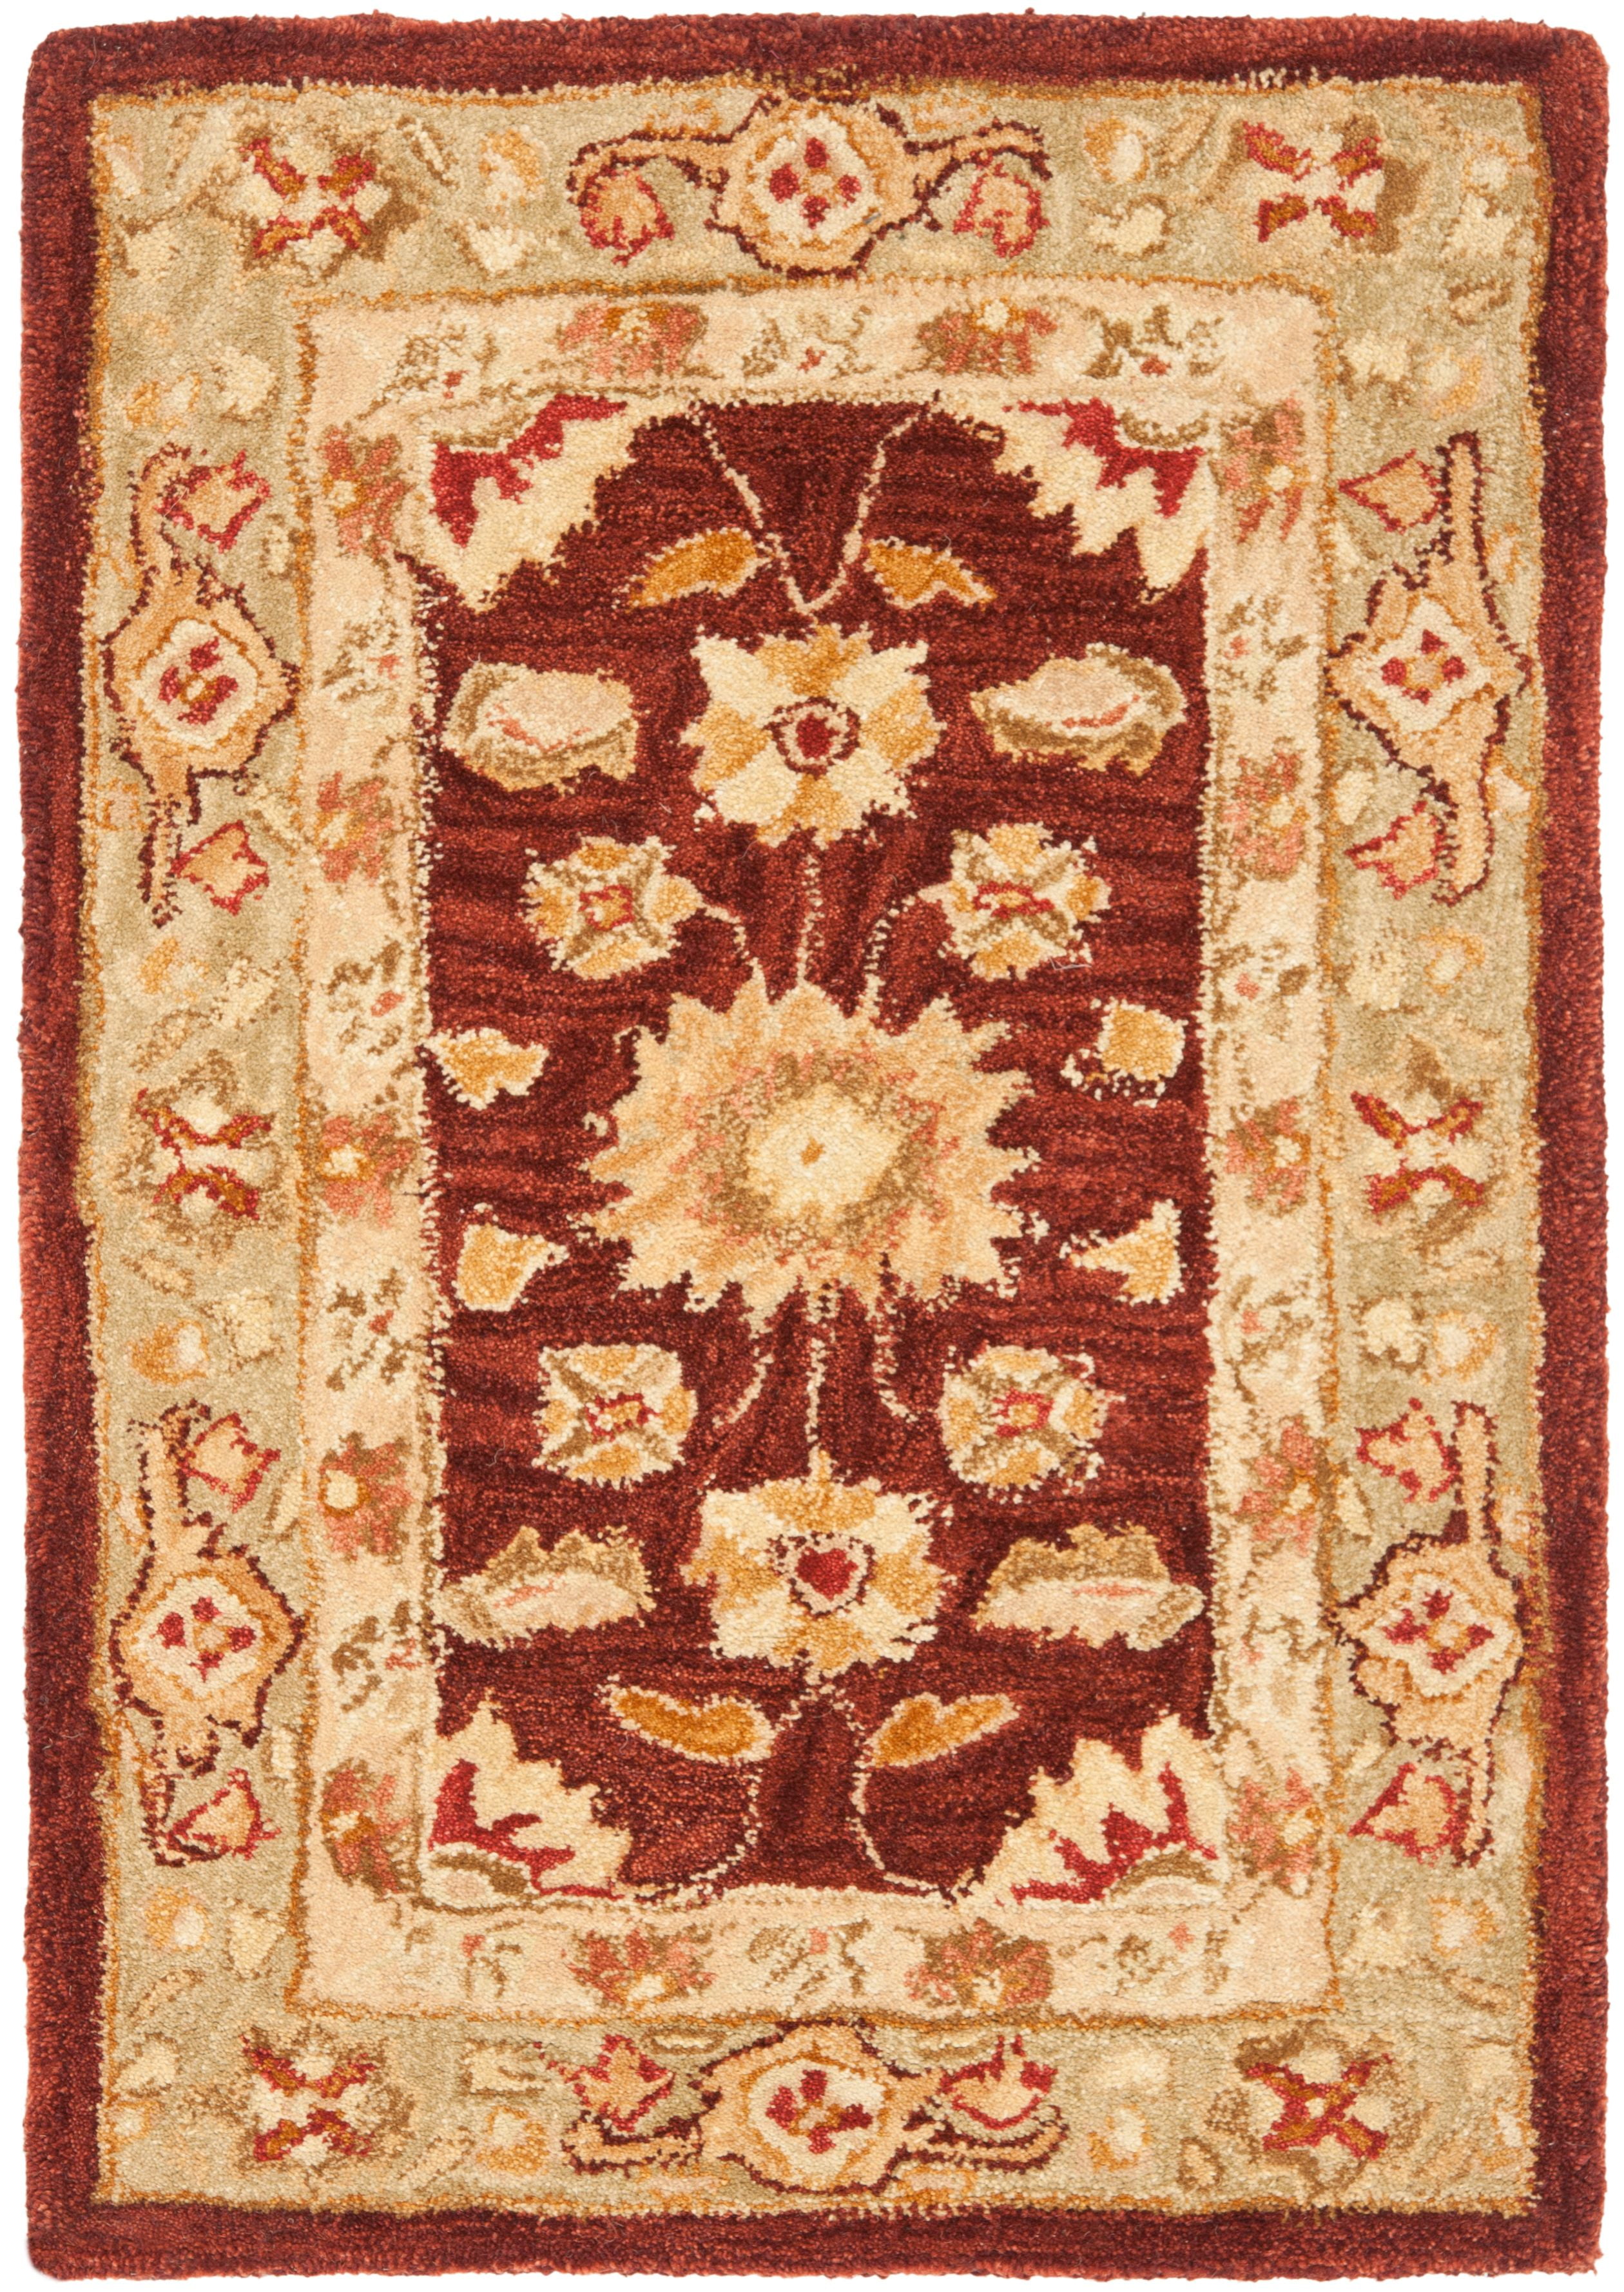 Sage Safavieh Anatolia Collection AN556F Handmade Traditional Oriental Premium Wool Runner 2'3 x 12' Red 